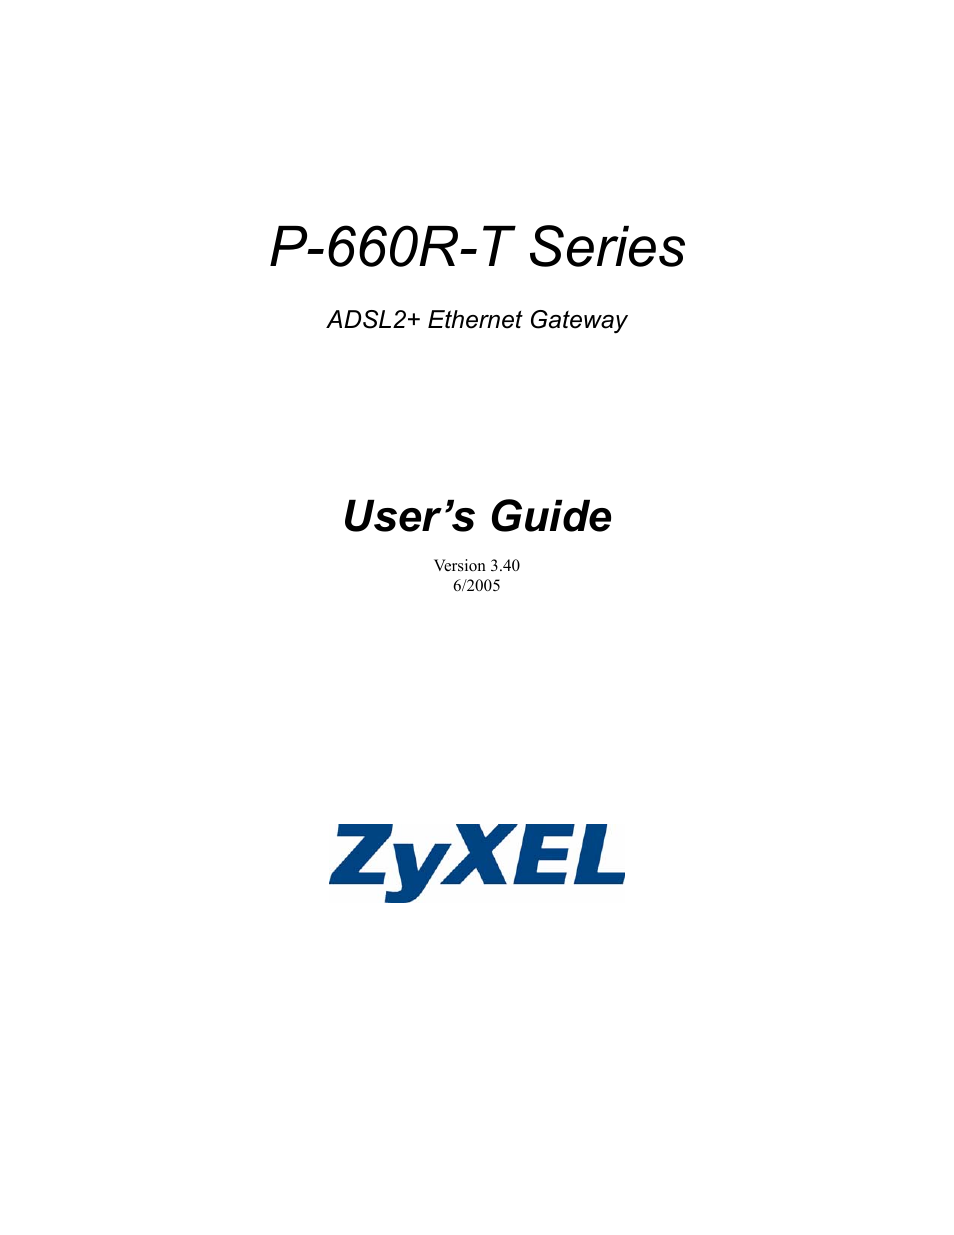 ADSL2+ Ethernet Gateway P-660R-T Series